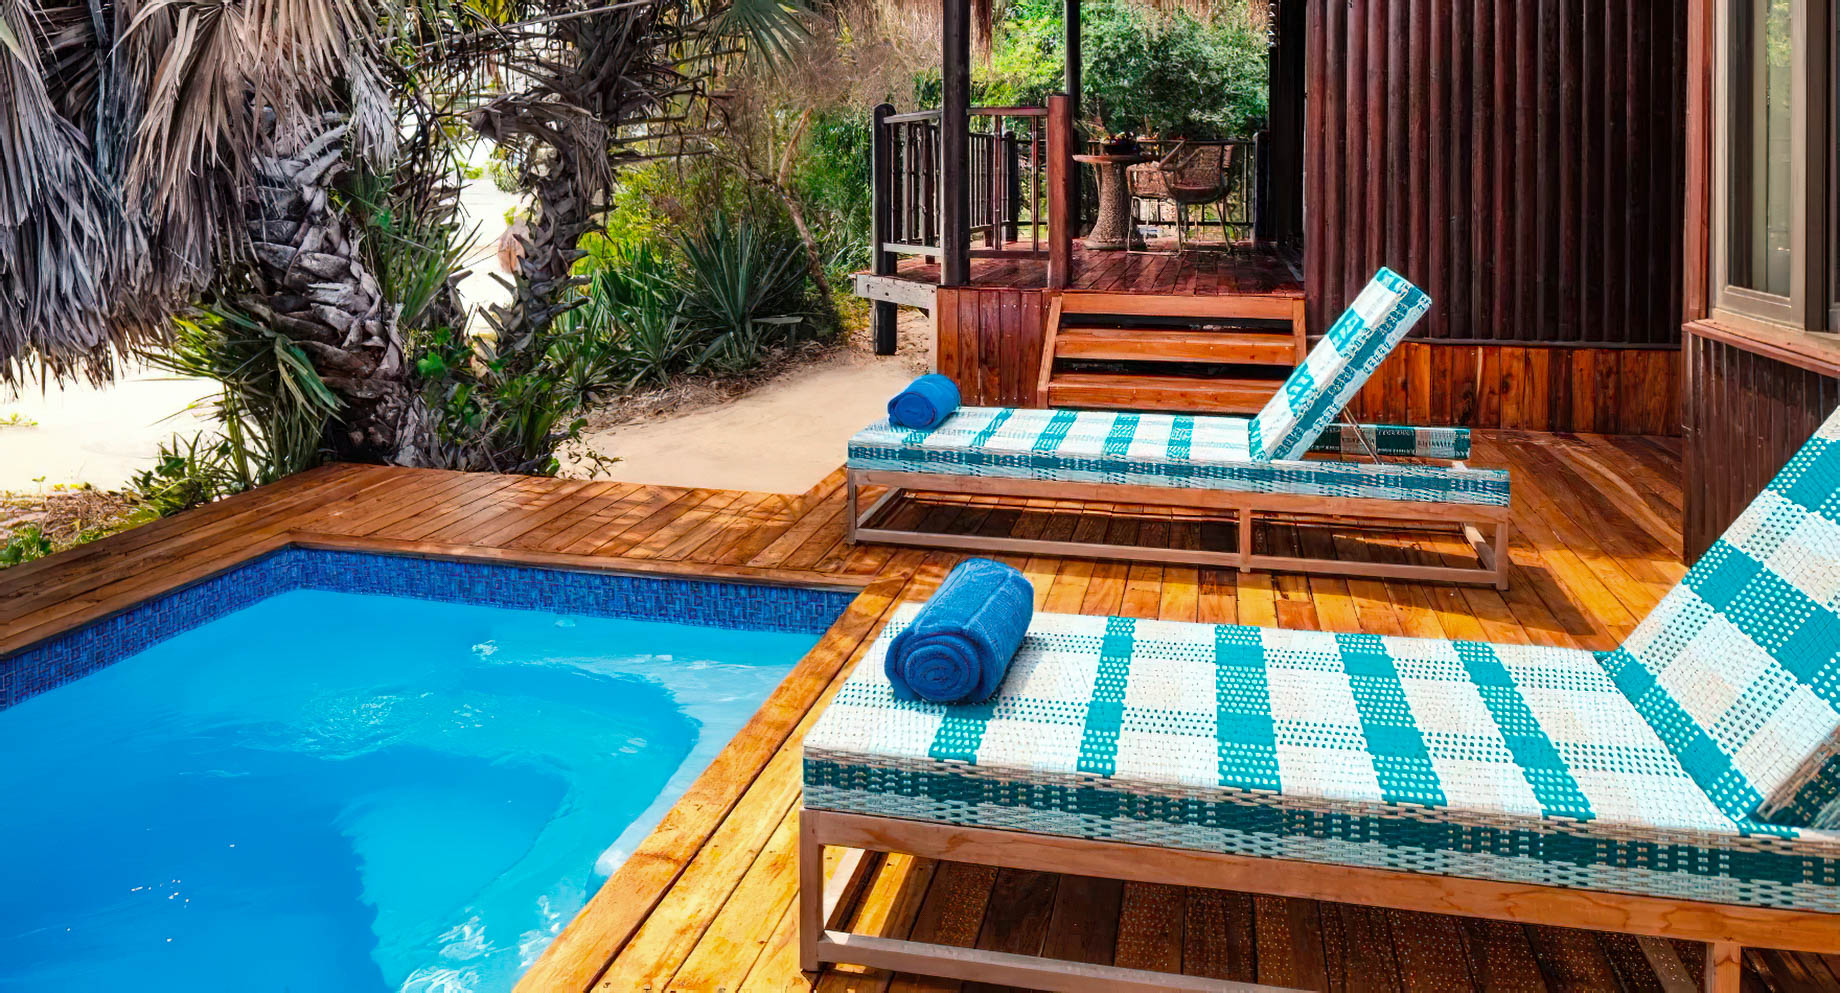 Anantara Bazaruto Island Resort – Mozambique – Beach Pool Villa Deck